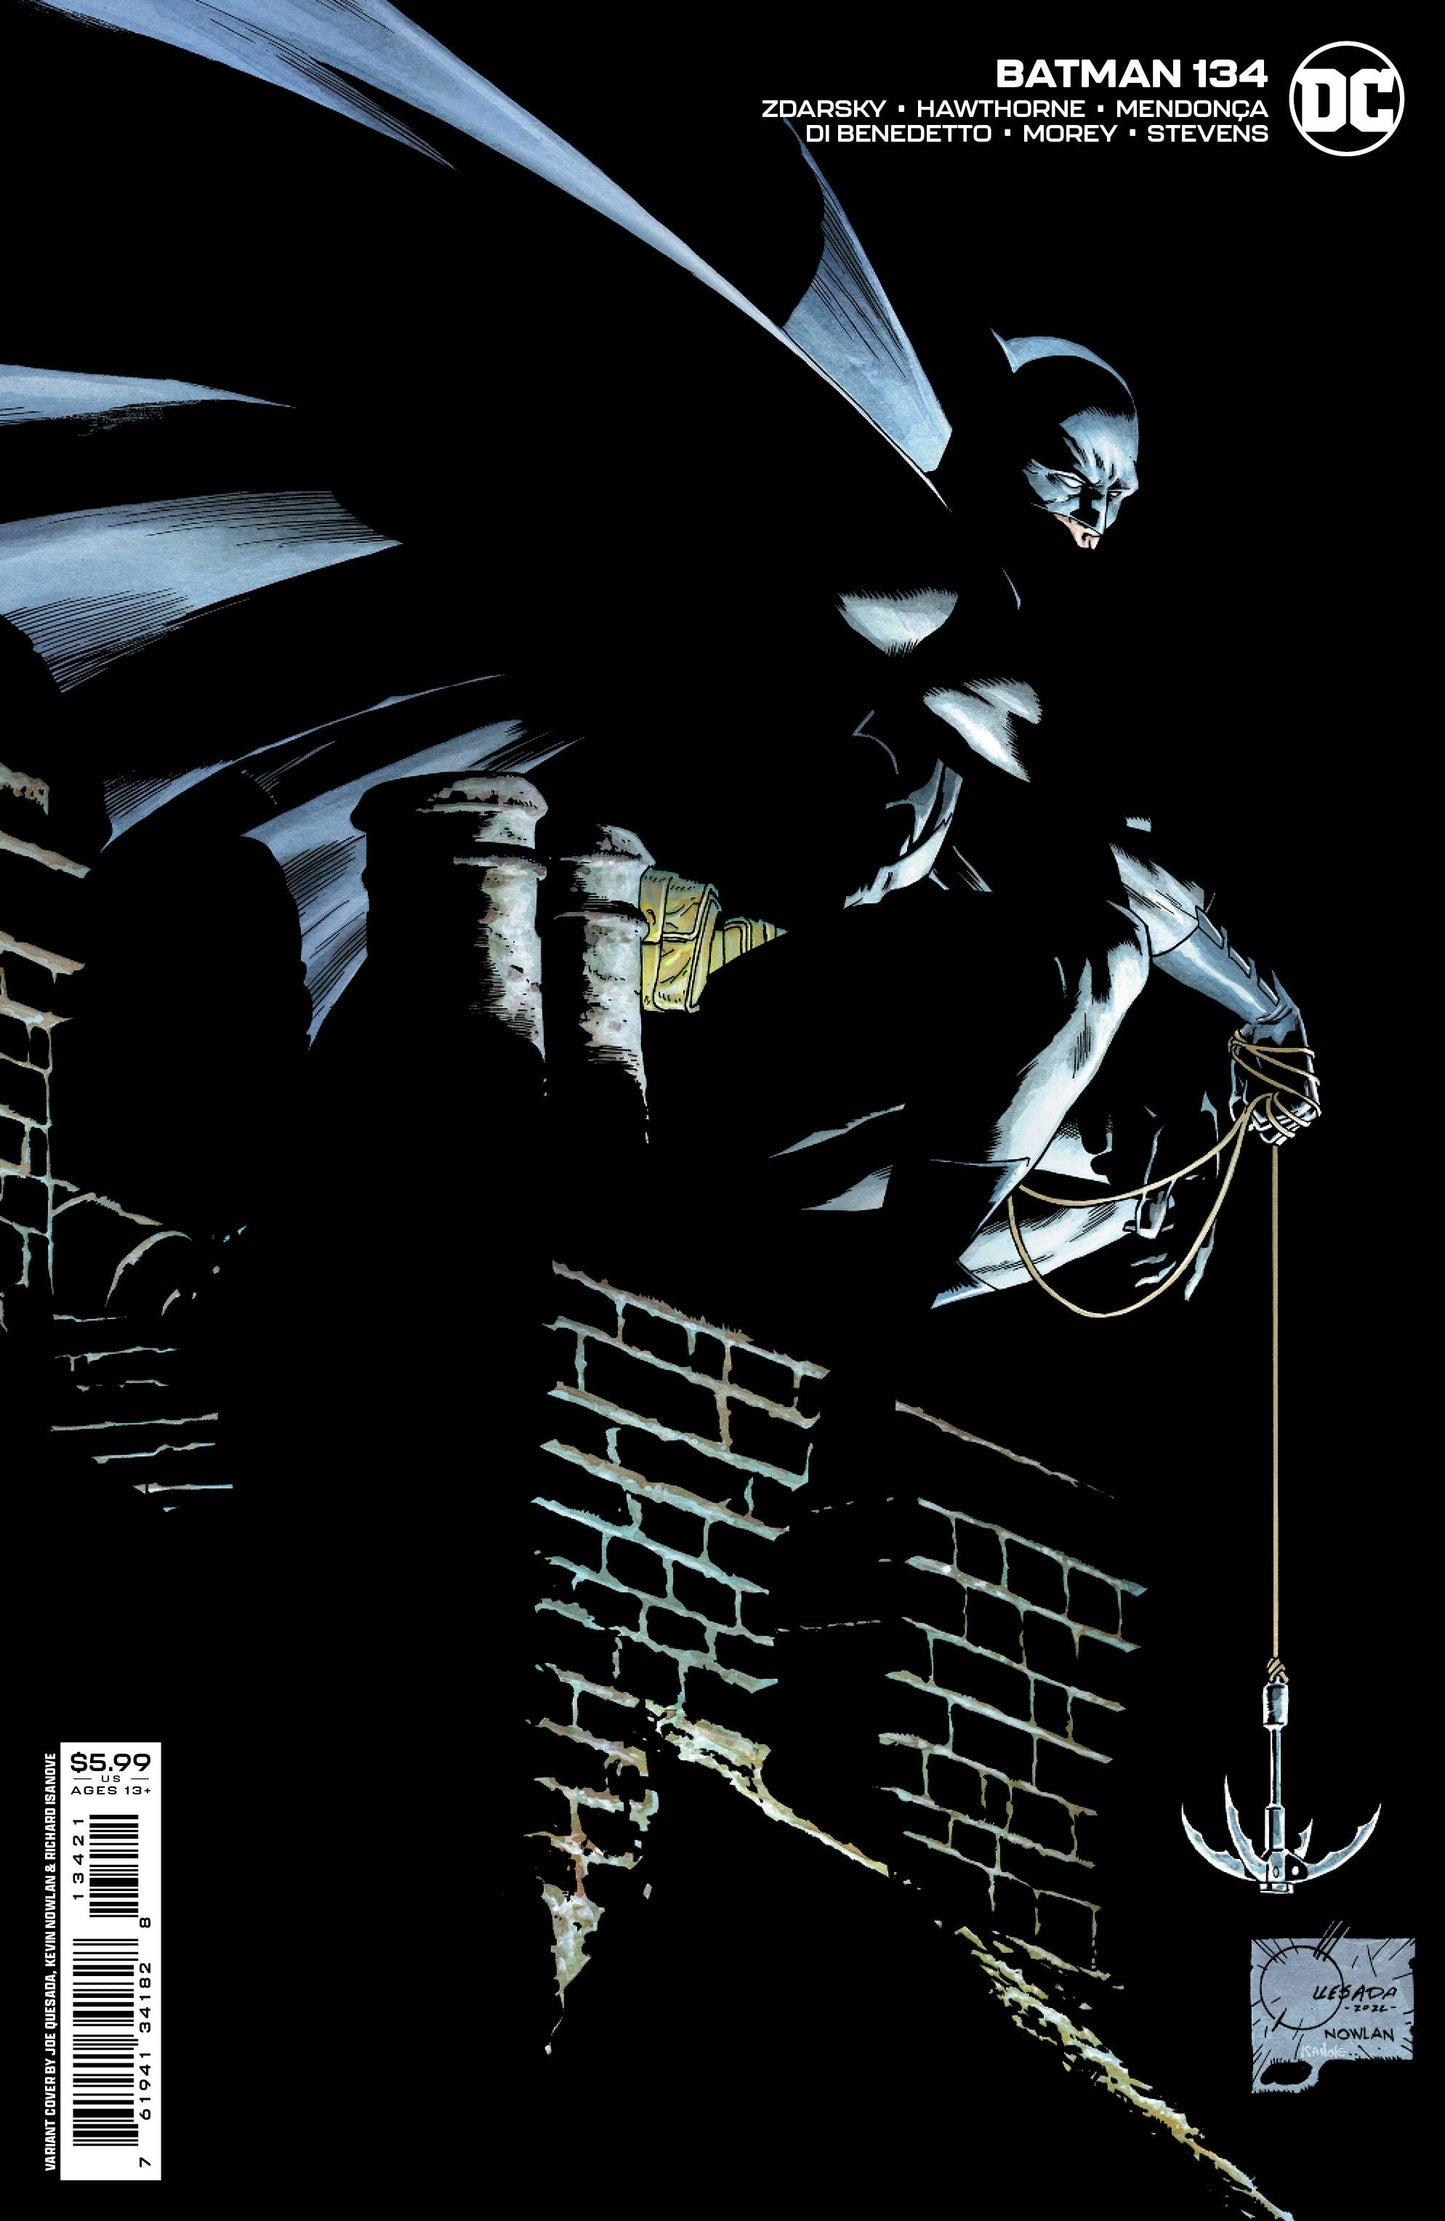 BATMAN #134 |Select Variant Cover |